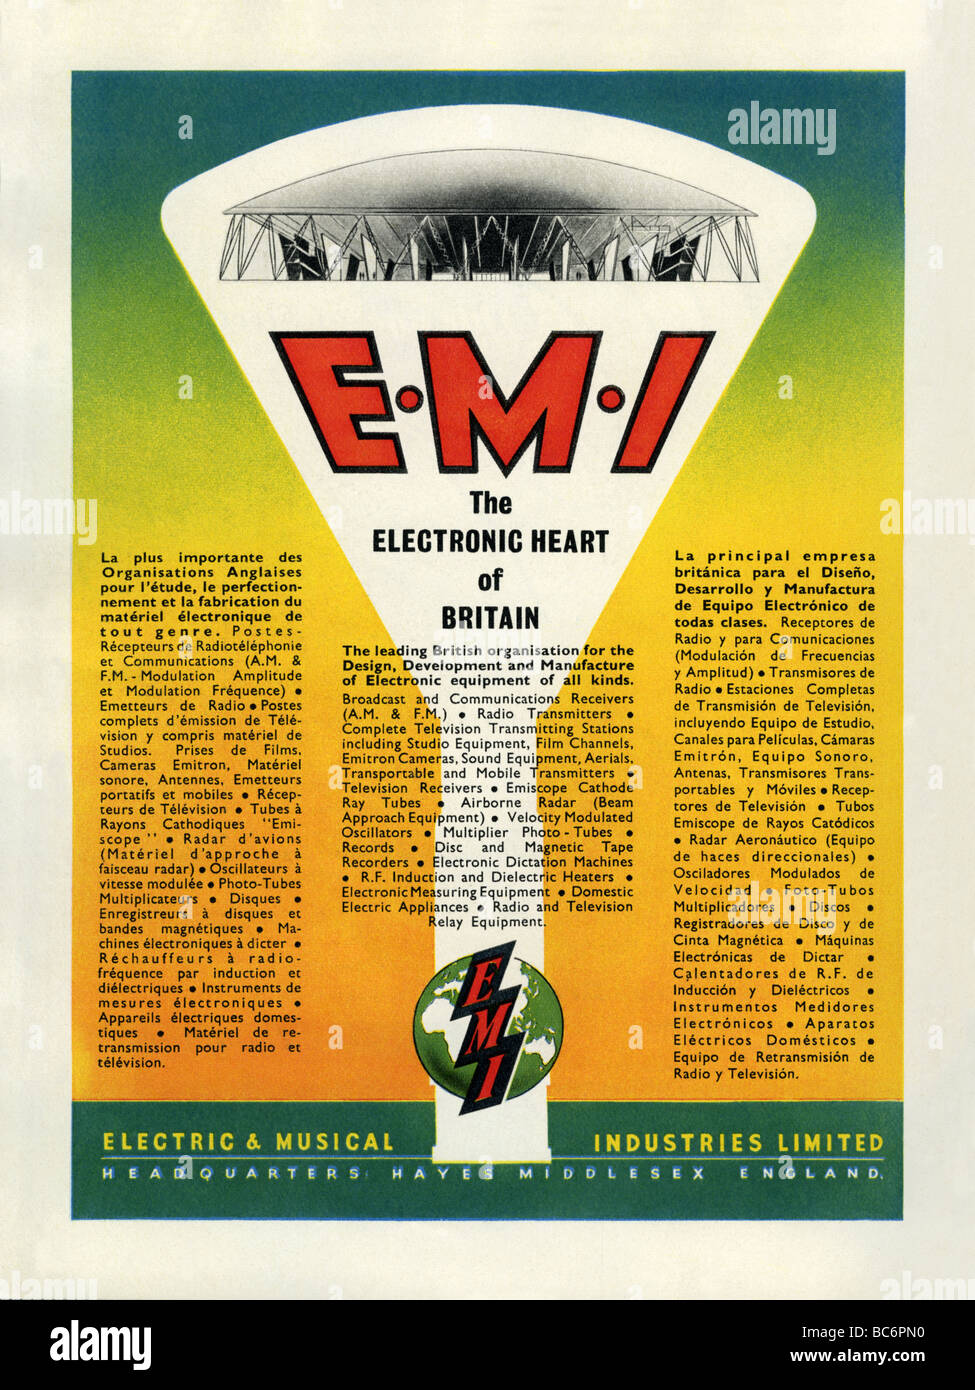 1951 colori per EMI (elettrico e industrie musicali), Hayes, Middlesex, Inghilterra Foto Stock